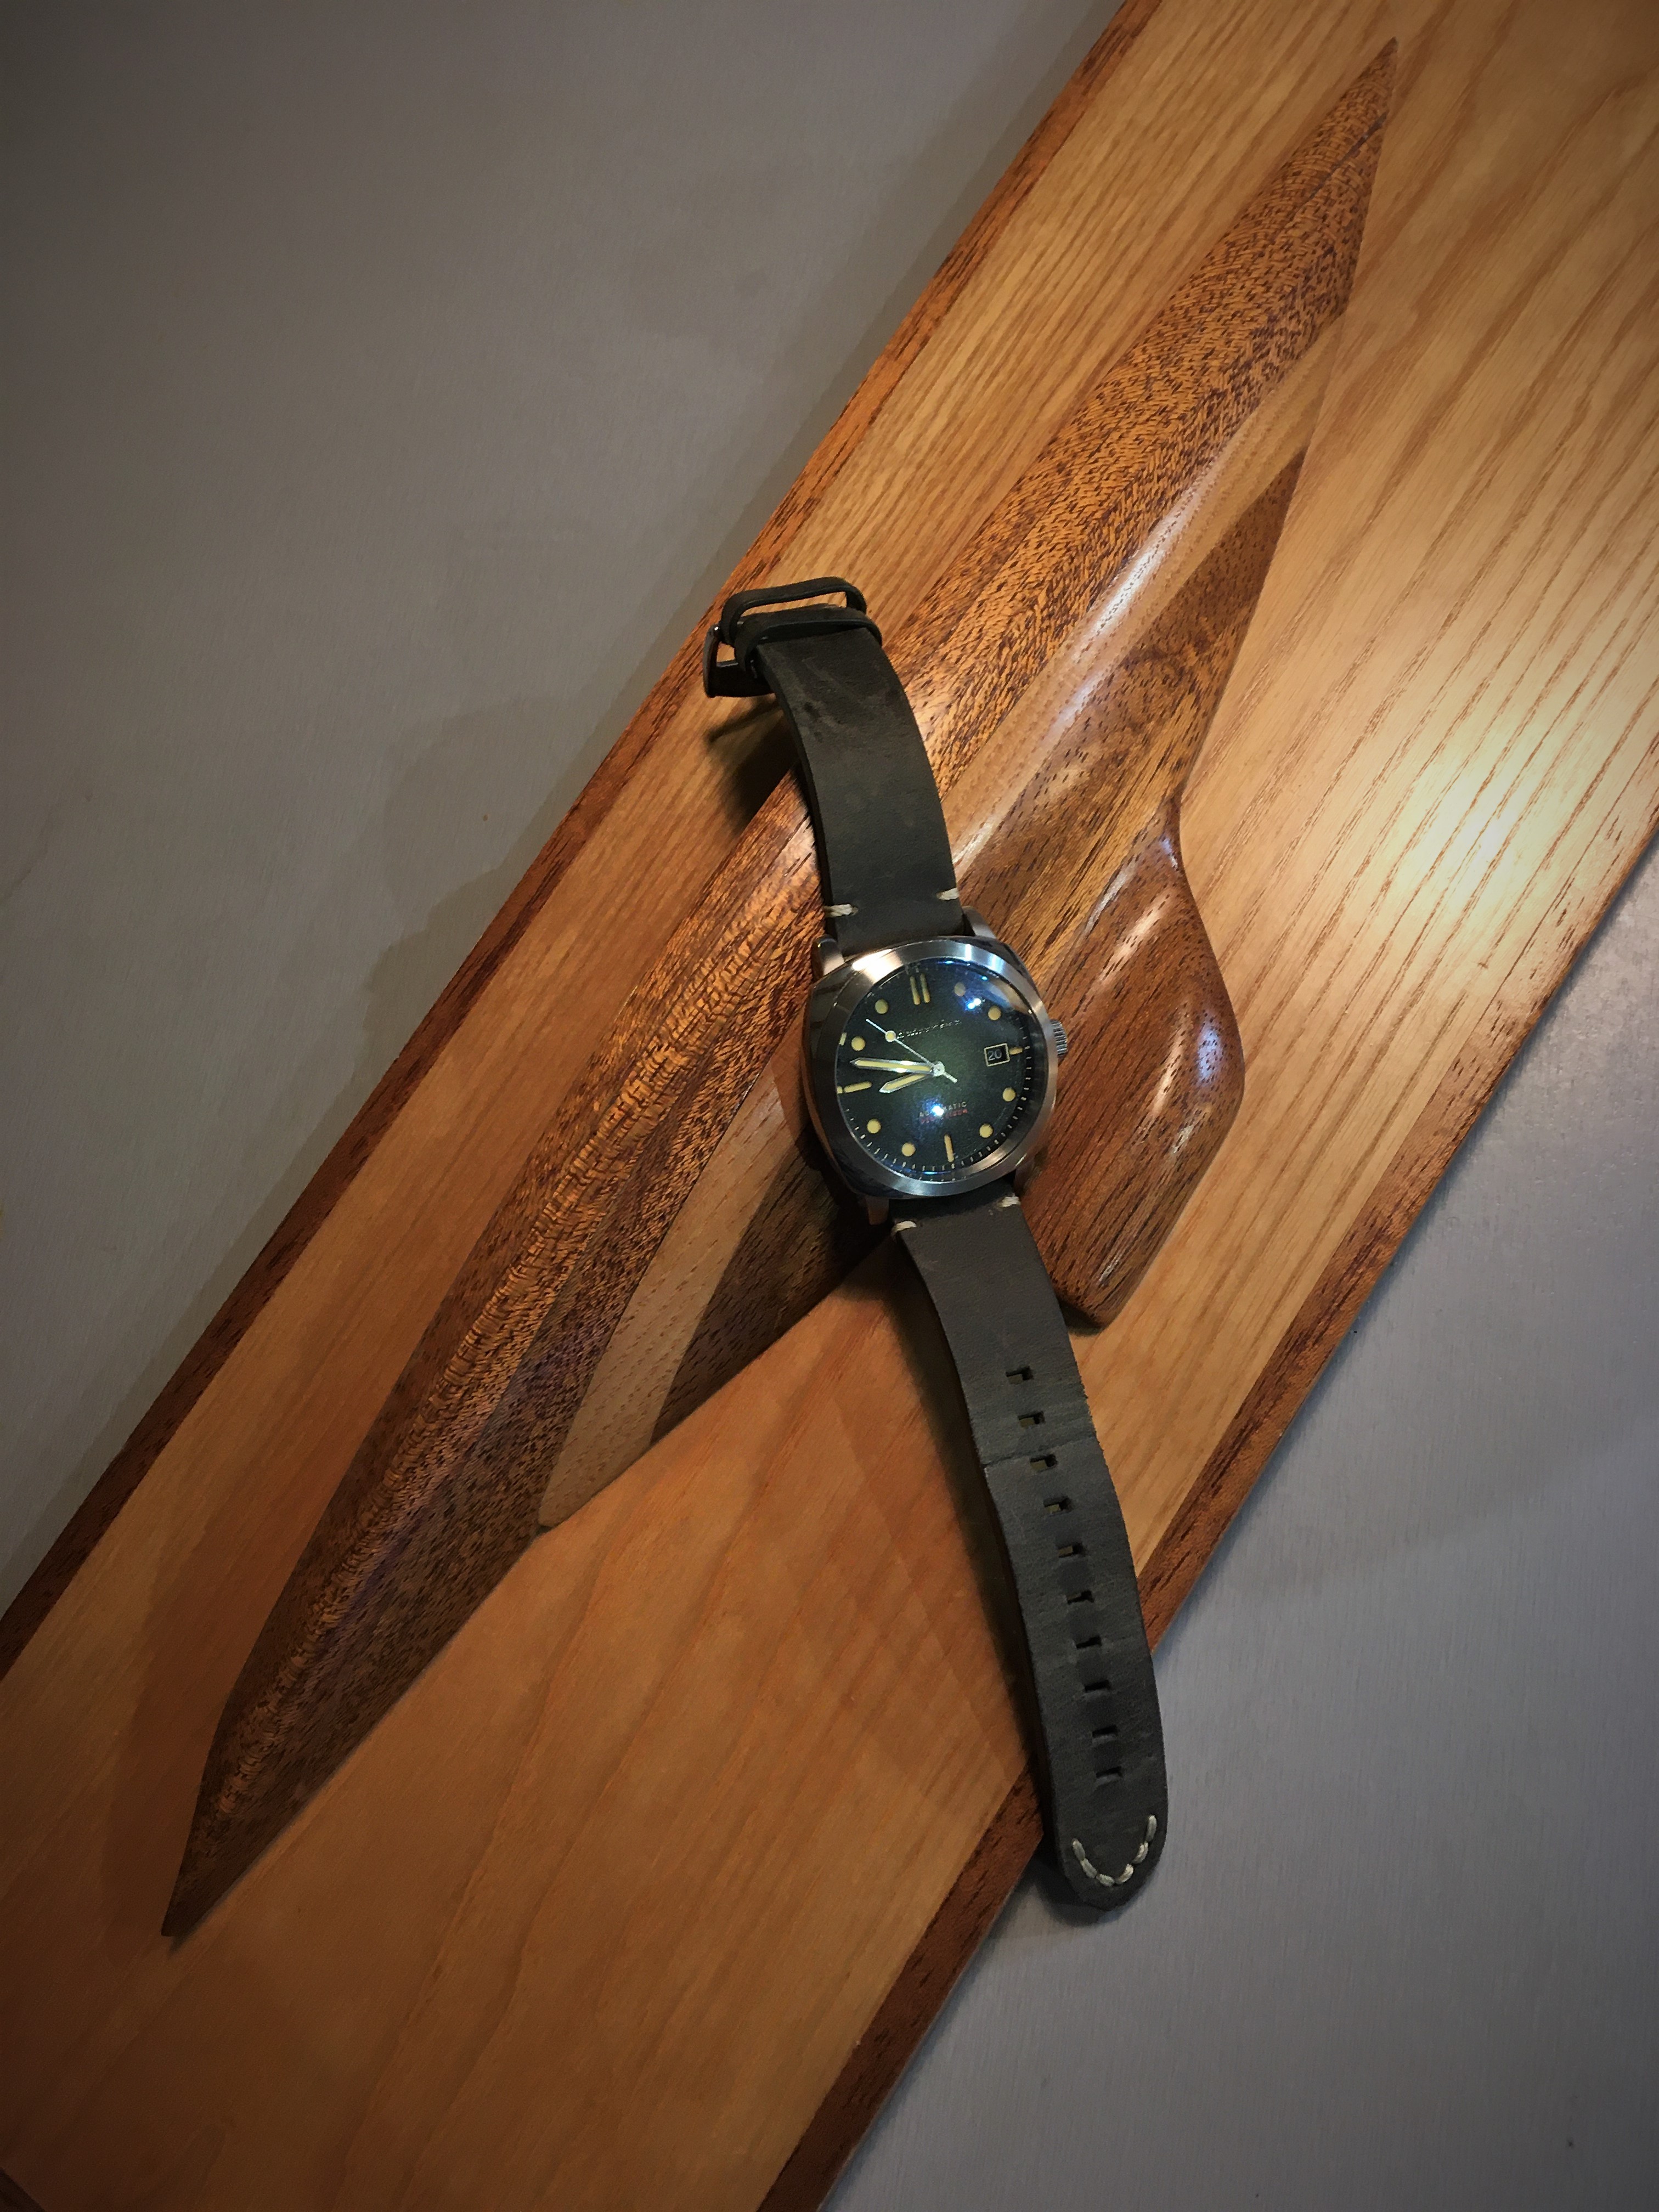 Les montres Spinnaker de Dartmouth Brands / Solar time limited – Hong Kong. 21012105541624054417223511